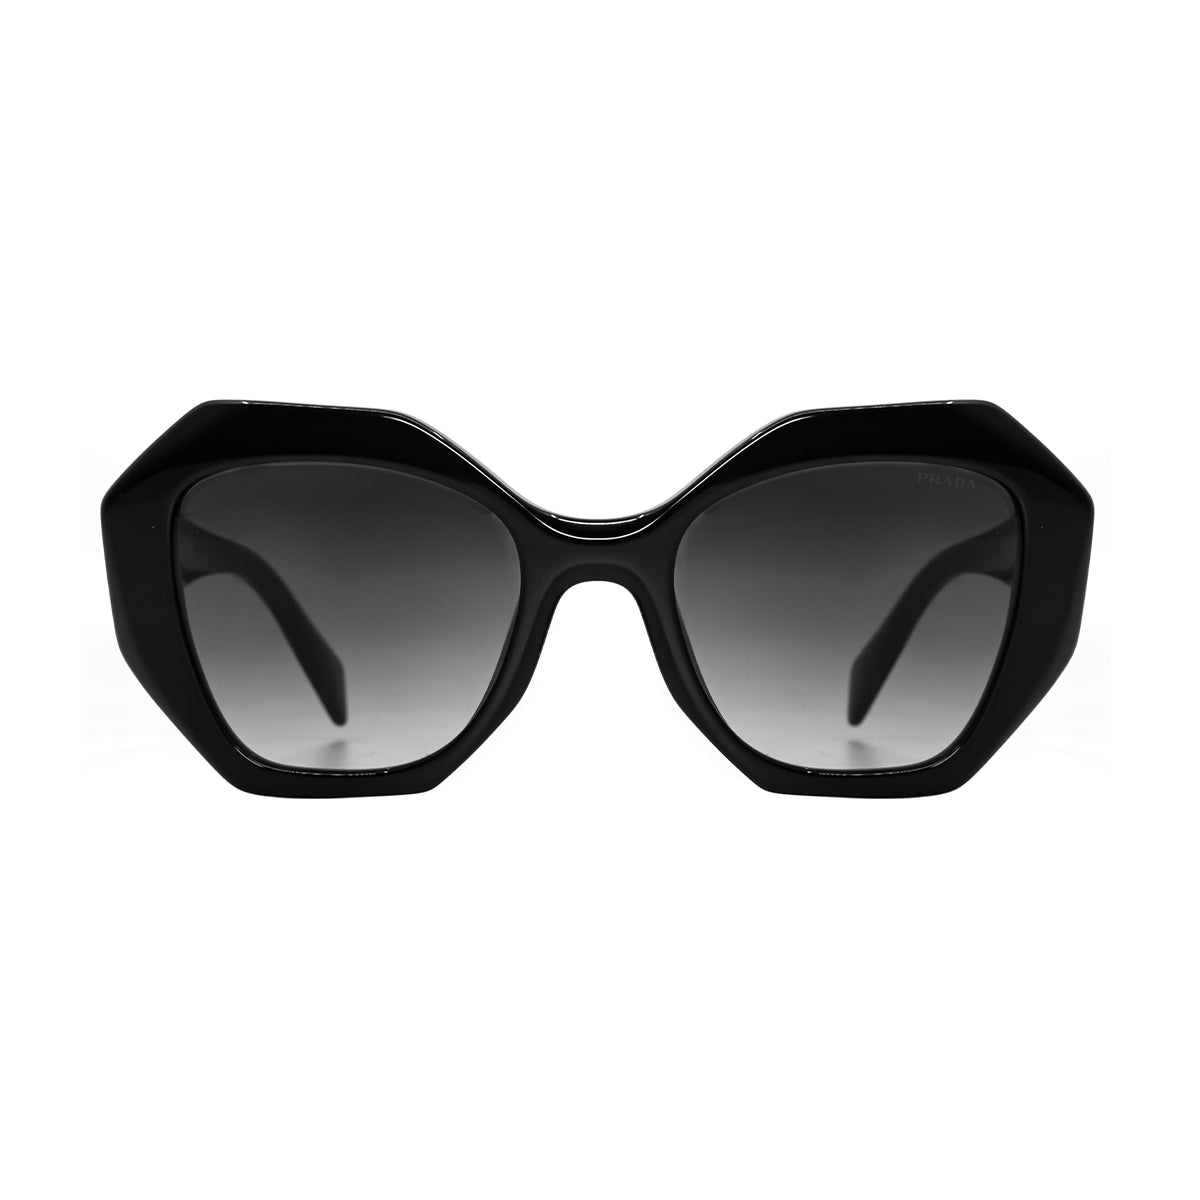 PRADA SPR 16W 1AB-5D1-3N sunglasses